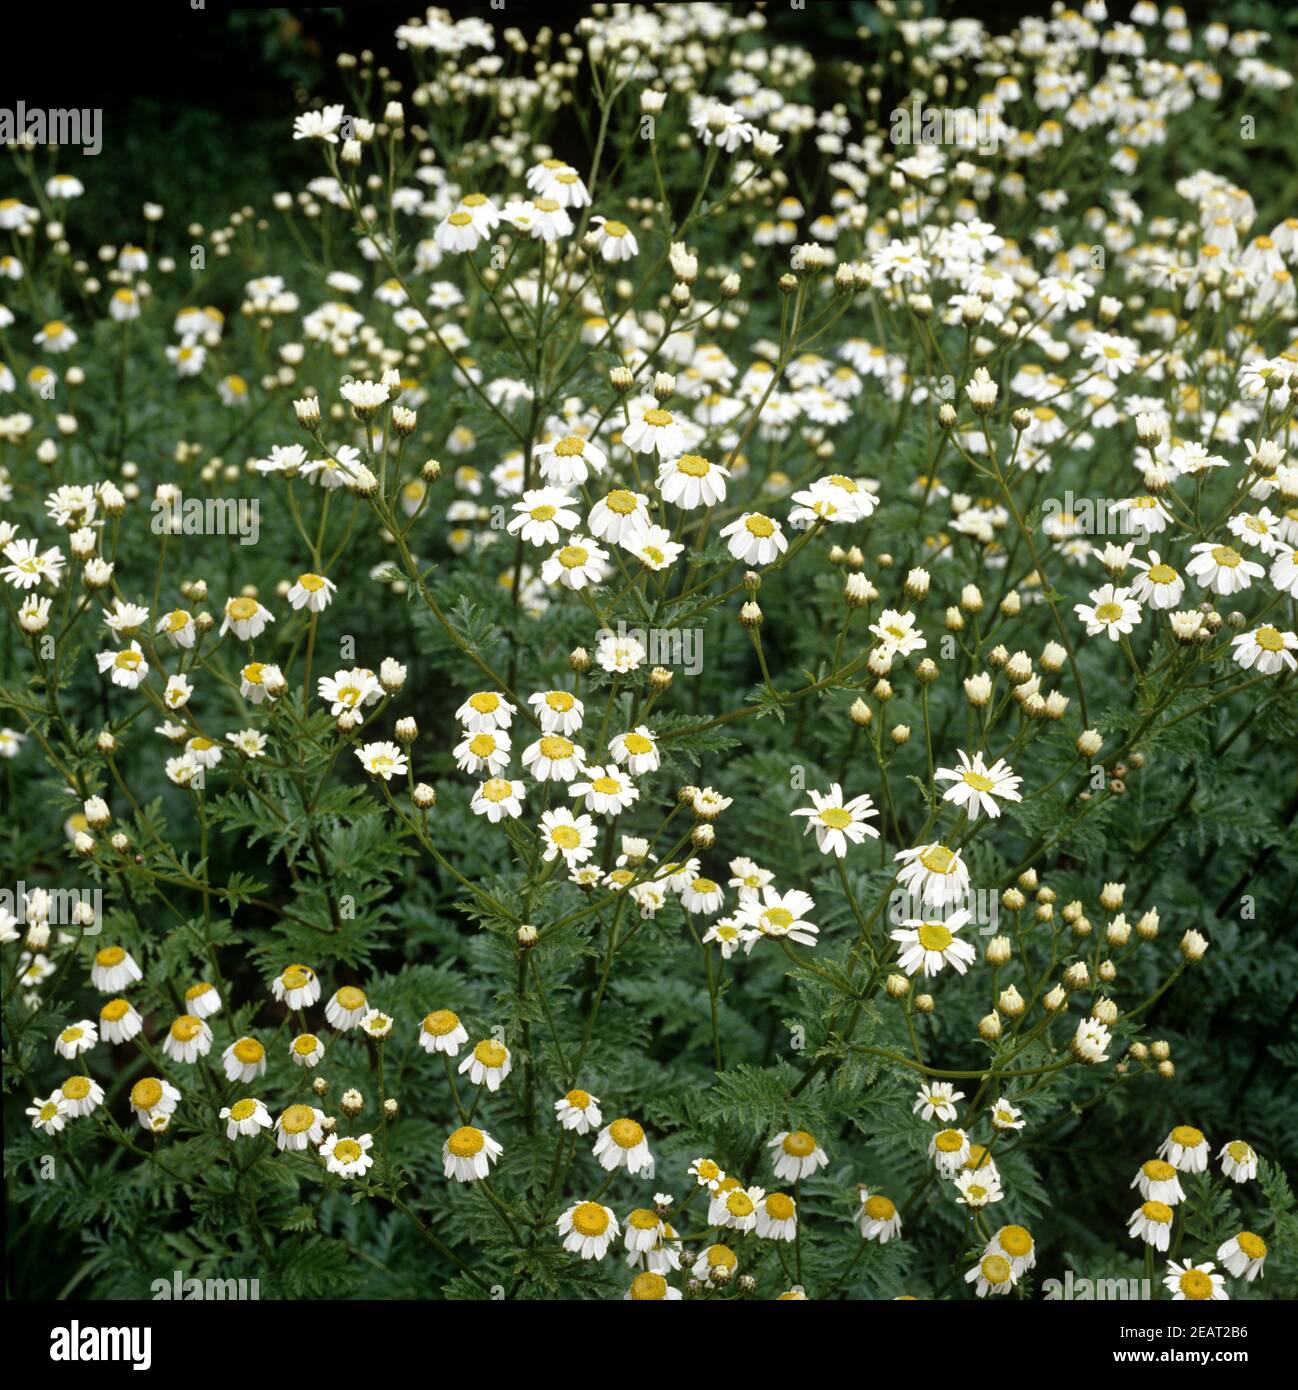 Ebenstraeussige Wucherblume  Tanacetum corymbosum Stock Photo